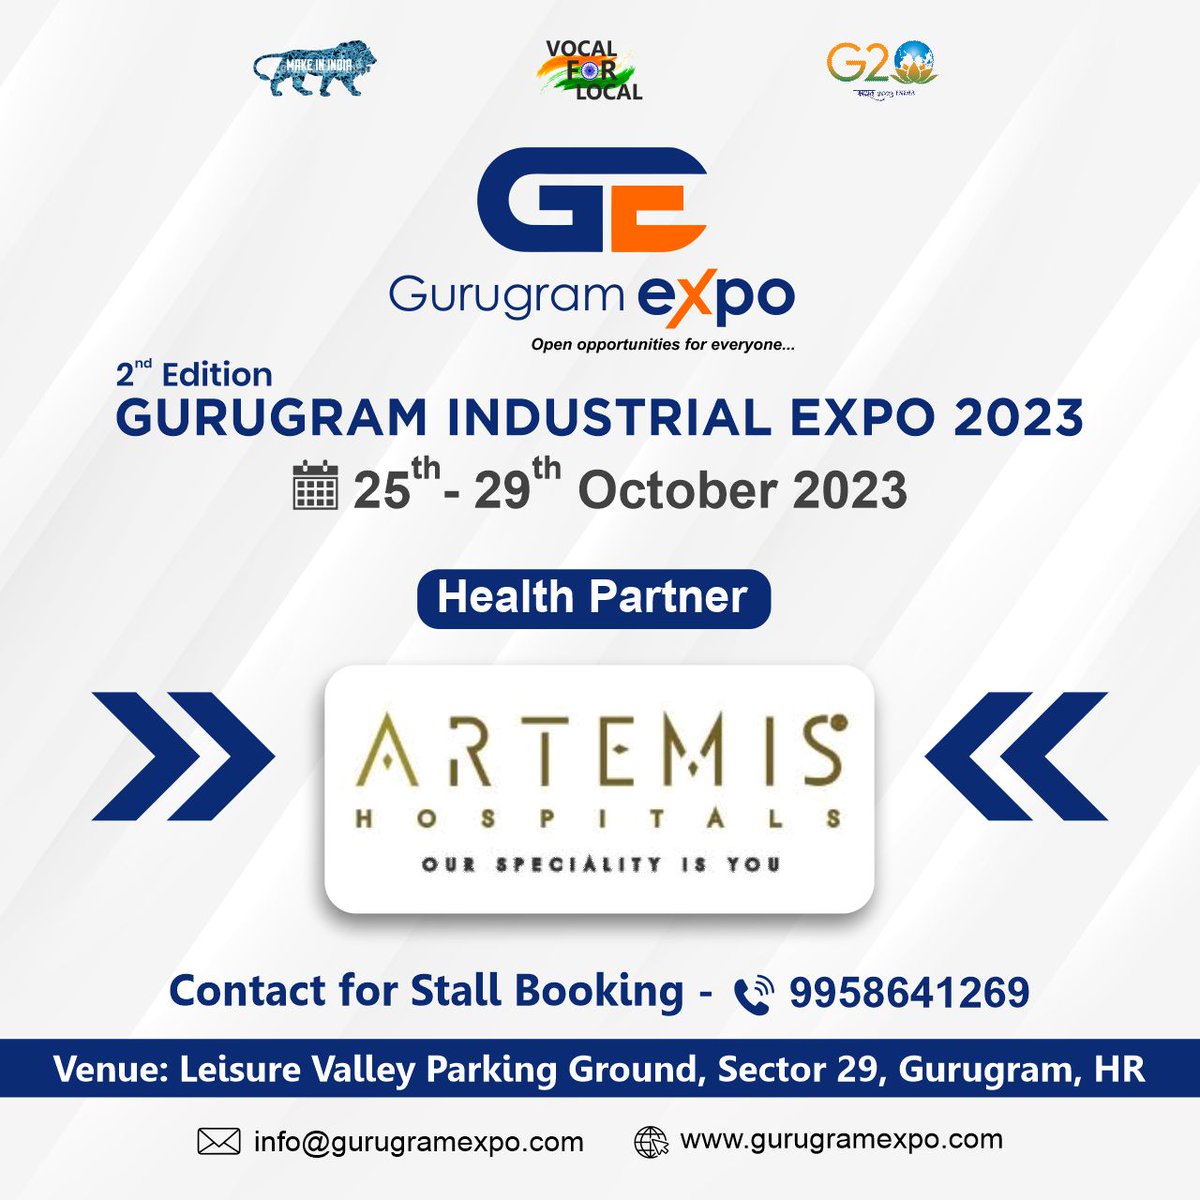 We're happy to announce that 'ARTEMIS HOSPITAL ' as Health Partner in Biggest Gurugram Industrial Expo.

#gurugramexpo #gurugramexpo2023 #ArtemisHospitals